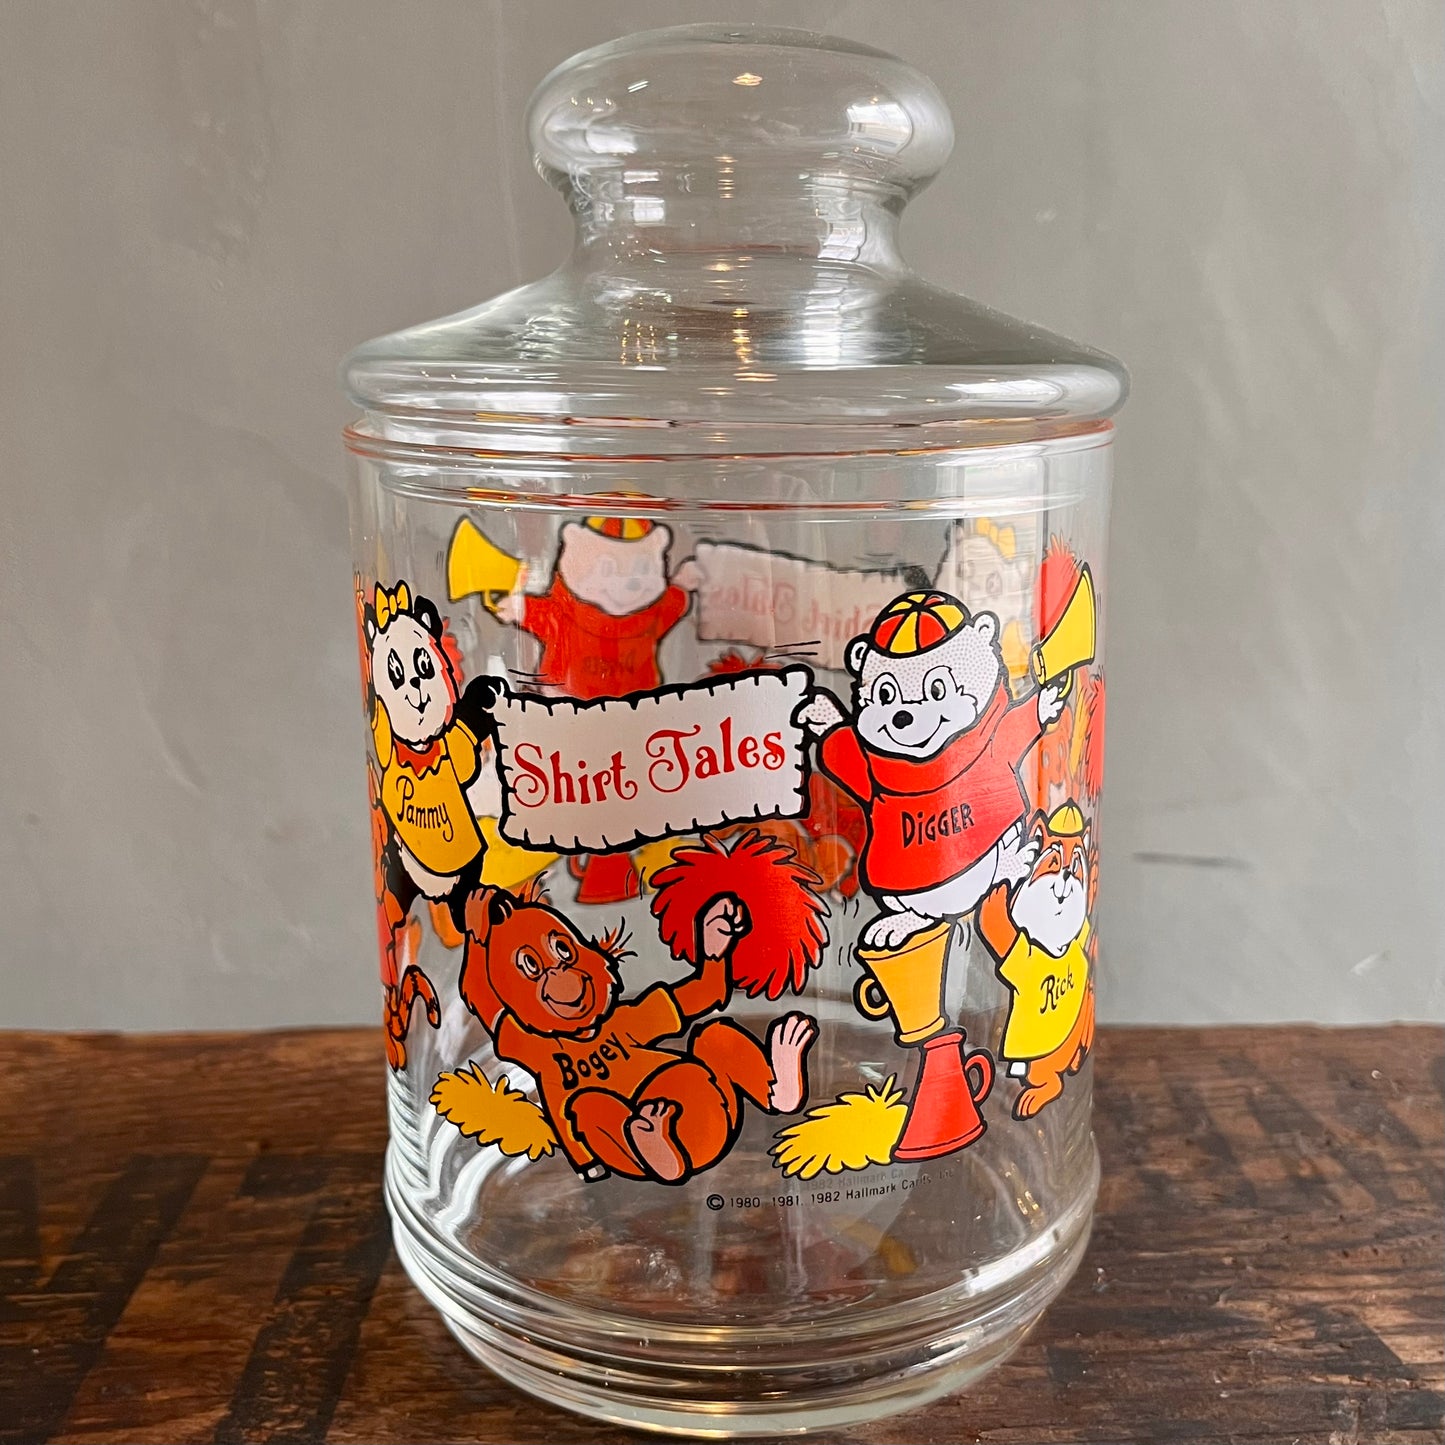 【USA 80s】Hallmark 
Shirt Tales Glass Candy Jar ガラスジャー